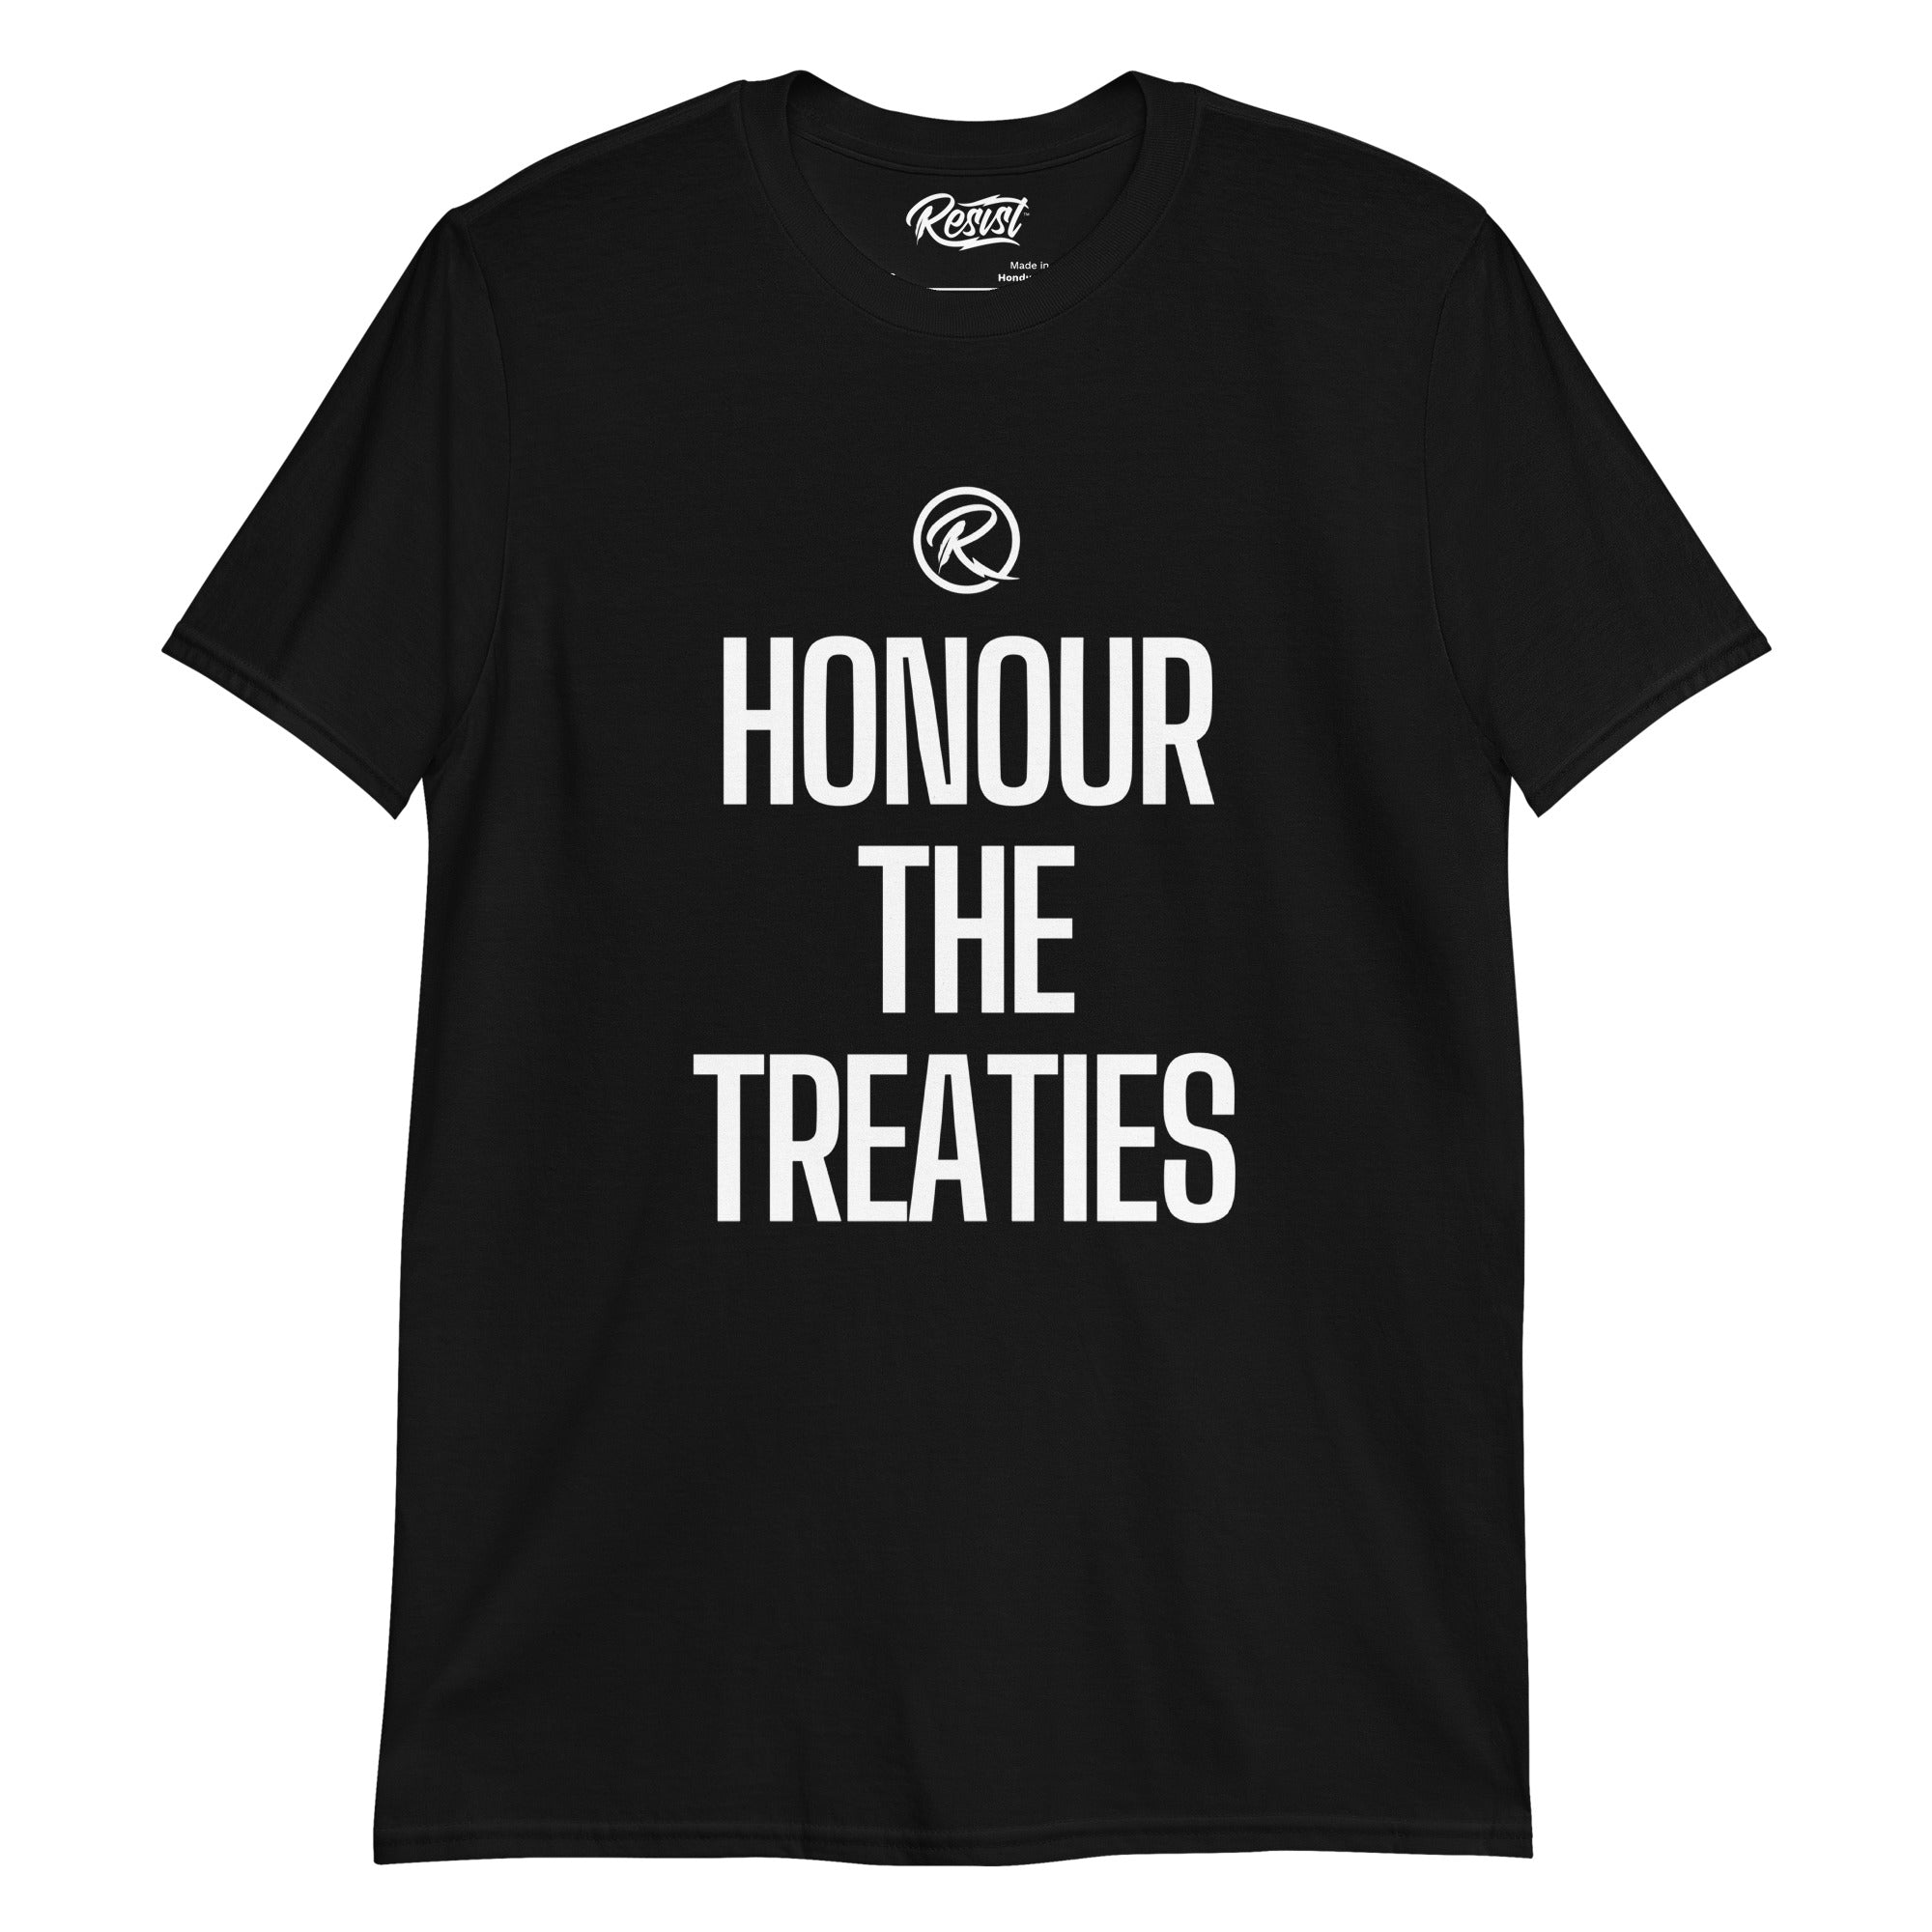 Honour the Treaties T-shirt